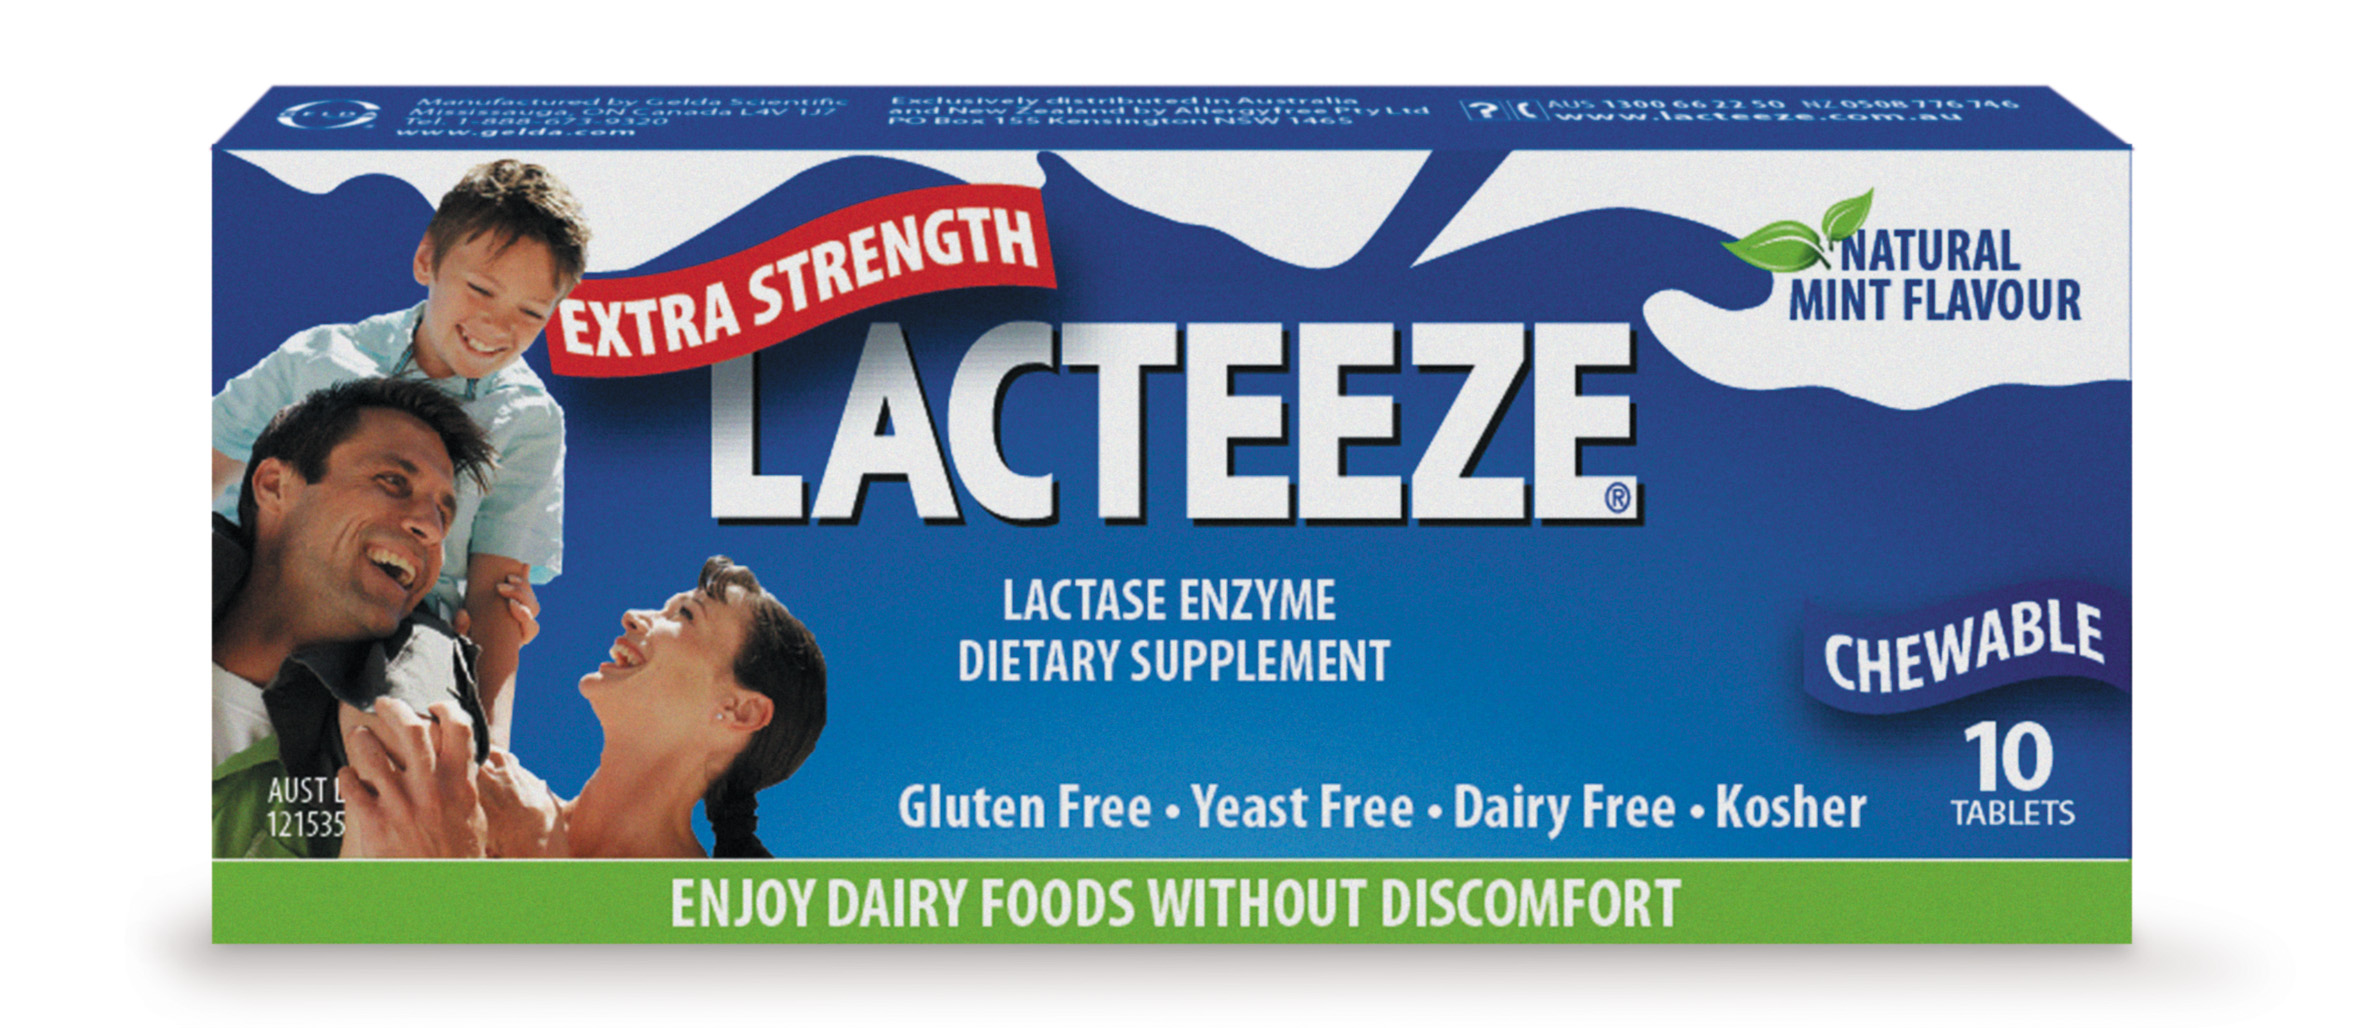 Are you Lactose Intolerant? Try Lacteeze Lactase Supplement